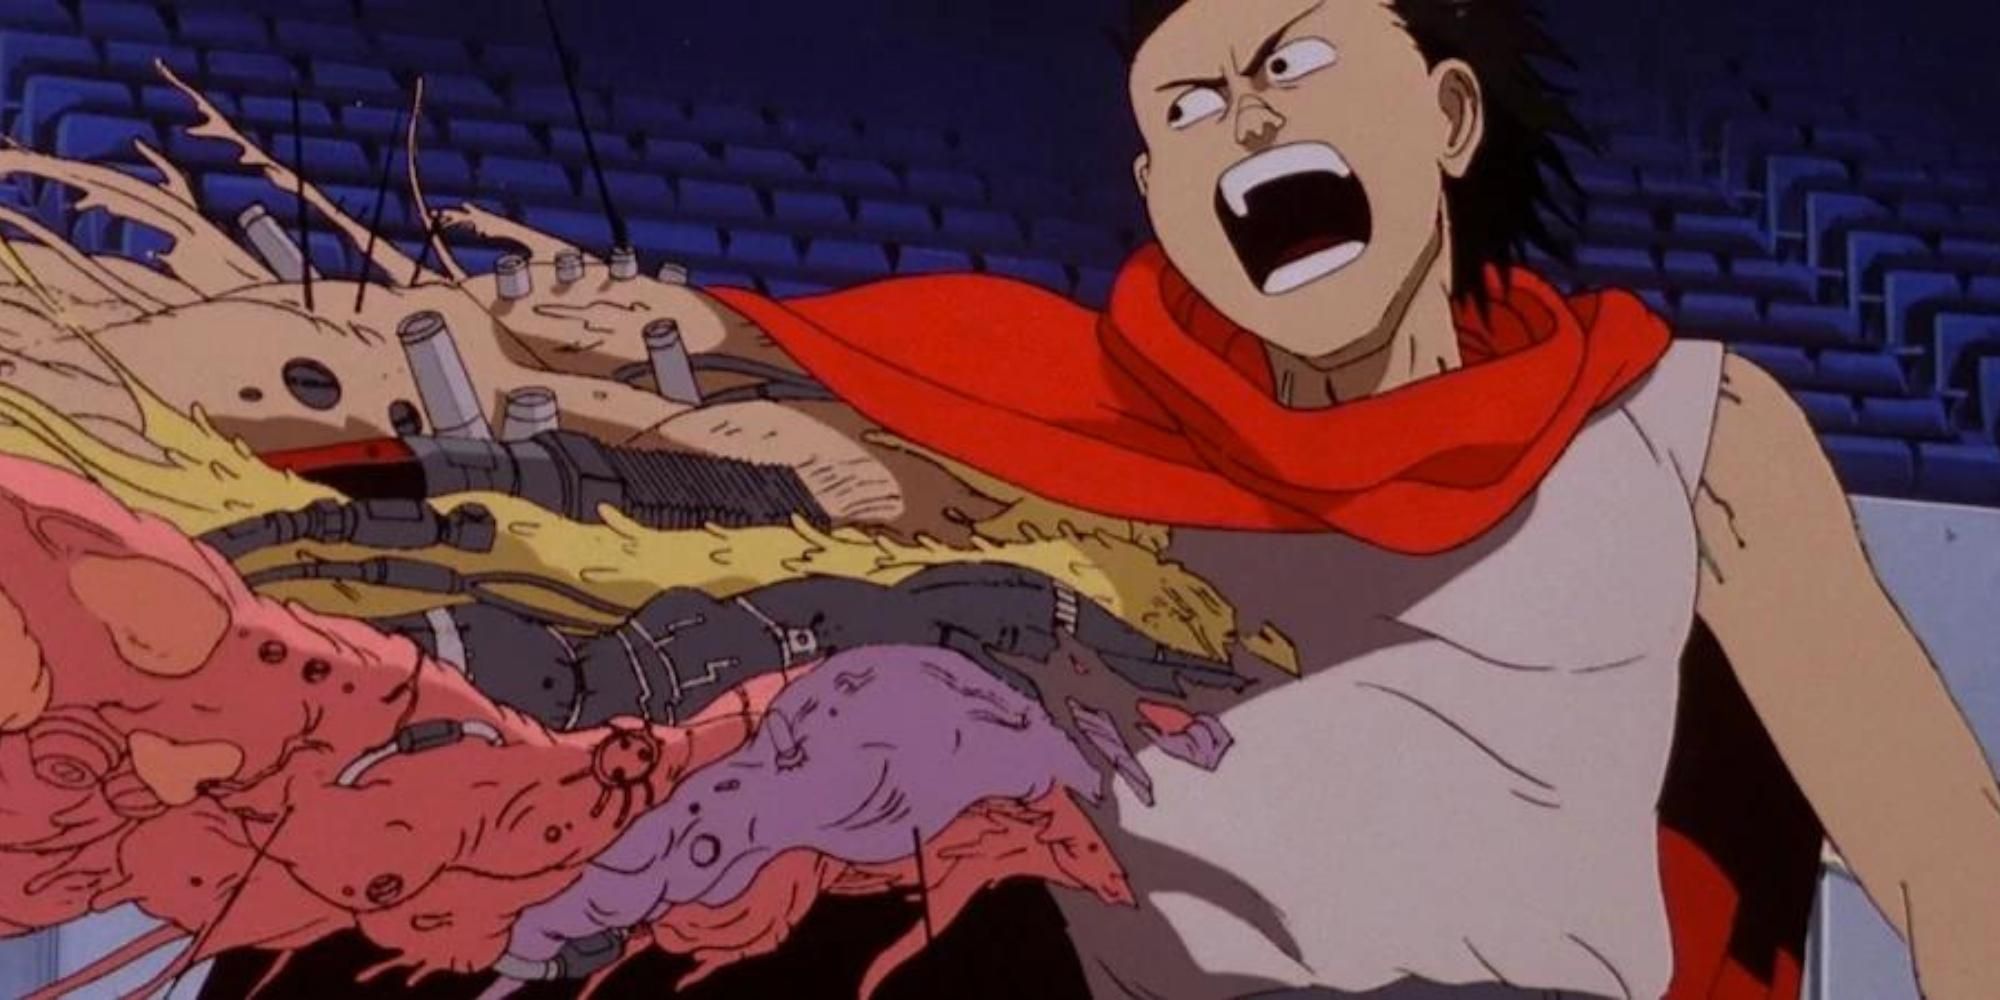 Tetsuo's Transformation in Akira